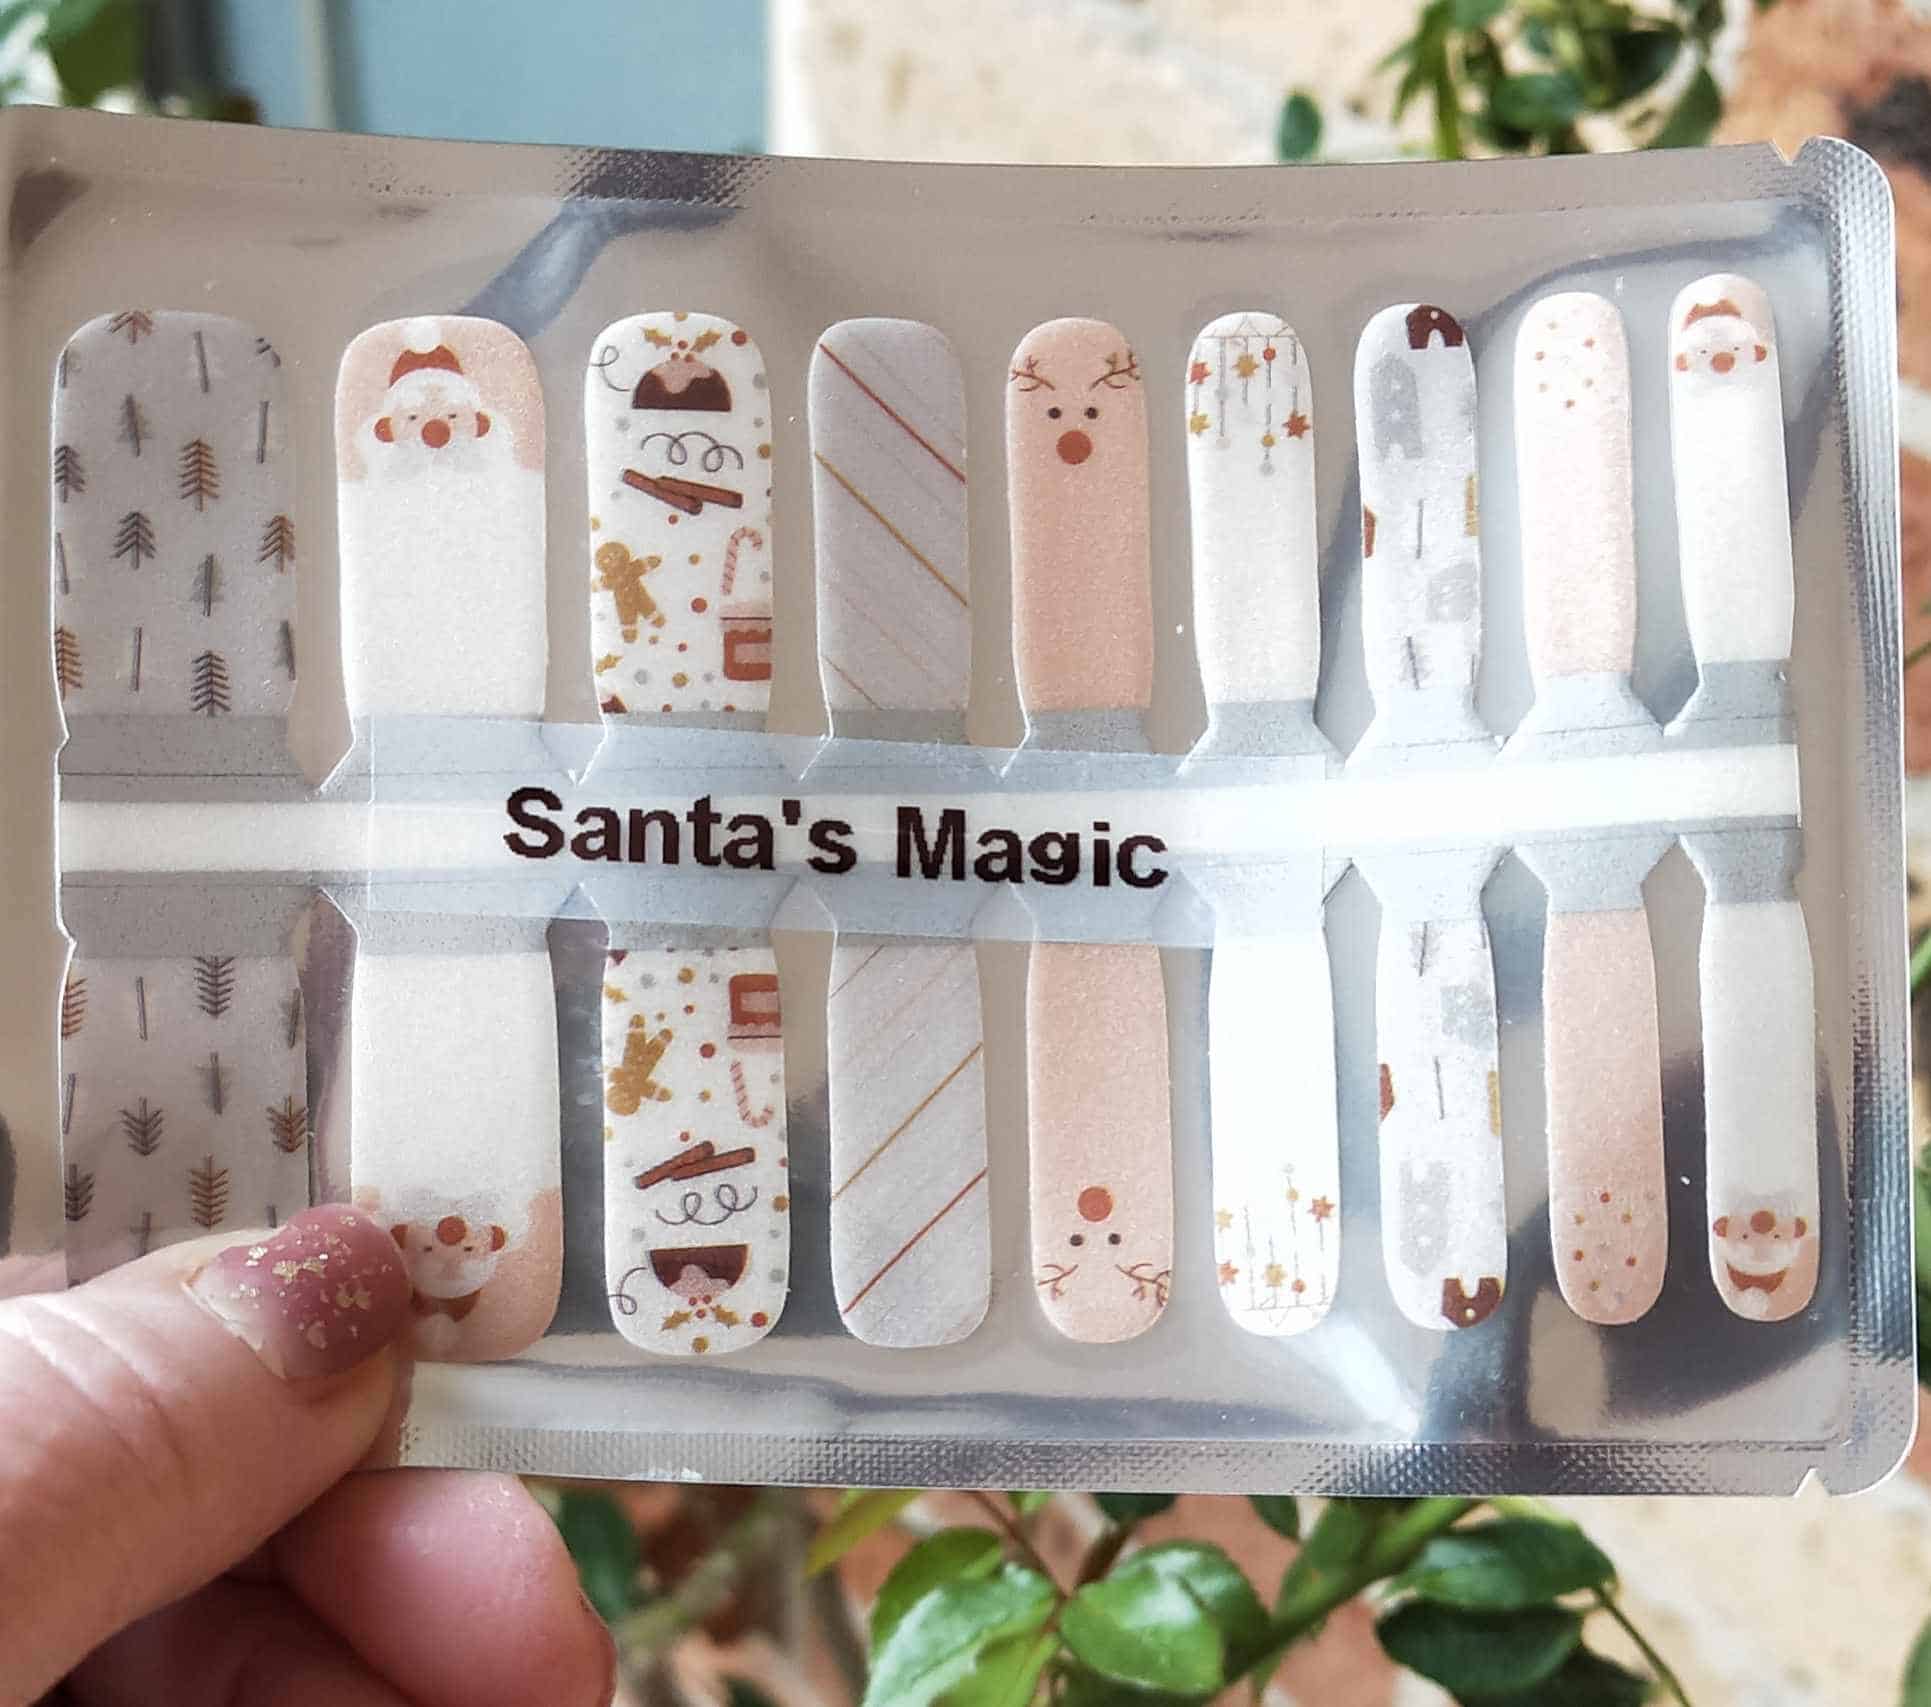 Bindy's Santa's Magic Nail Polish Wrap